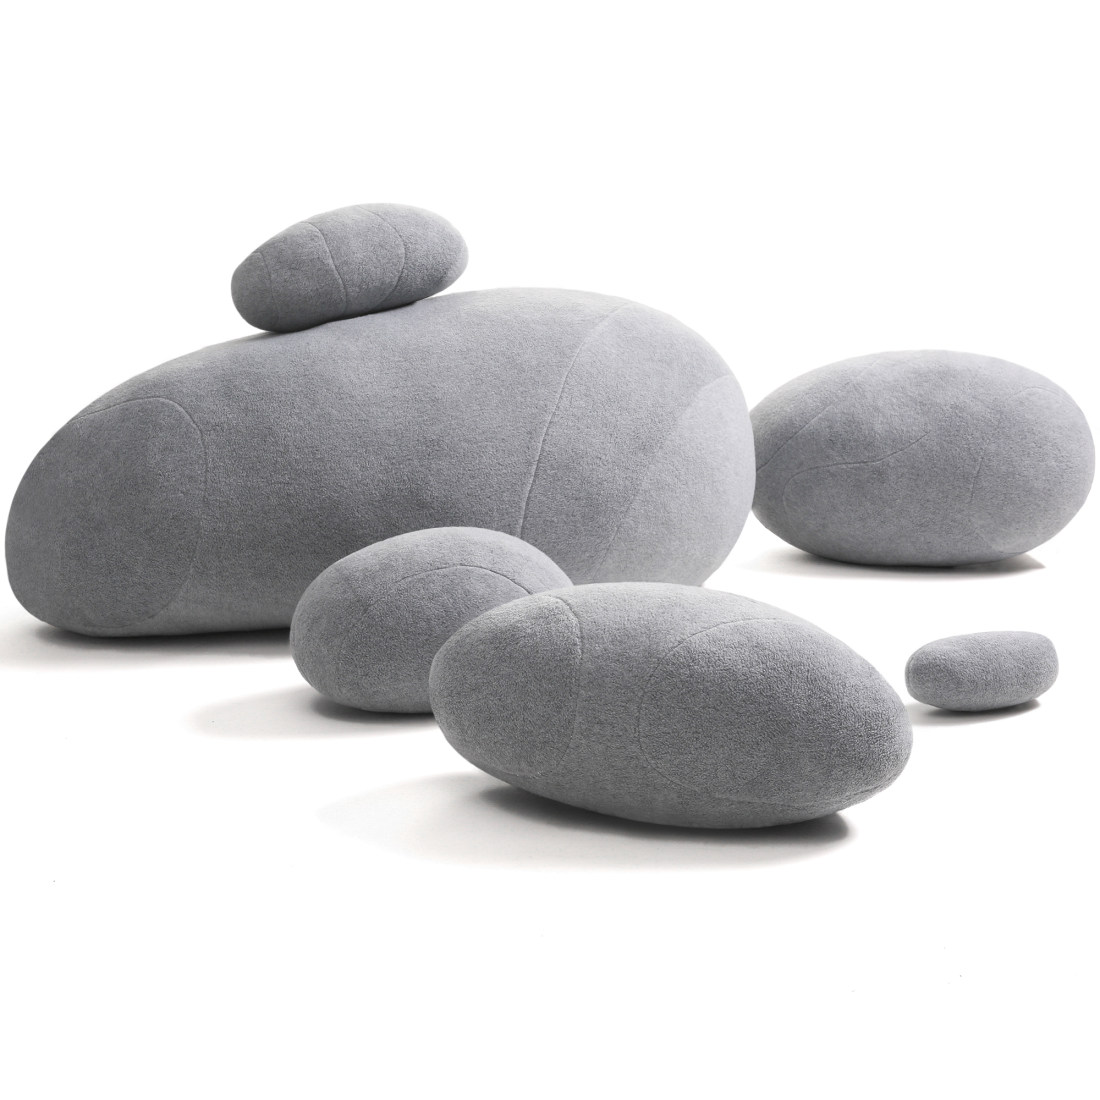 Pebble Cushions Rock Pillows Rock Cushions Decorative Sofa Pillows Floor  Pillows Novelty Throw Pillows Fun Gift 